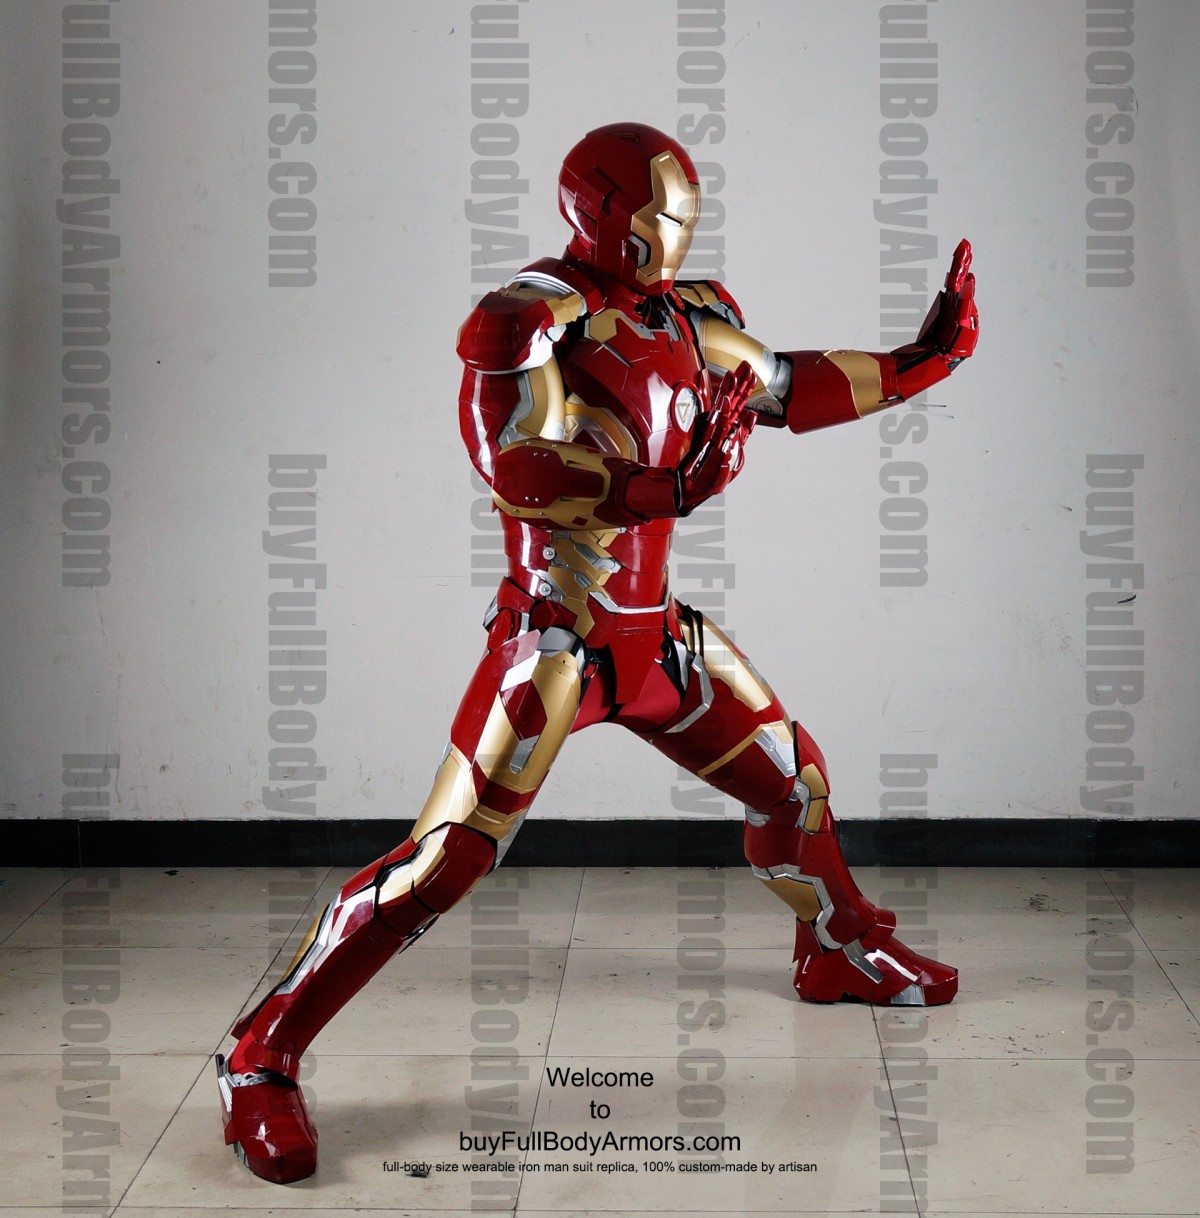 Buy Iron Man suit, Halo Master Chief armor, Batman costume, Star Wars armor   Buy the Wearable Iron Man Mark 43 (XLIII) suit costume armor